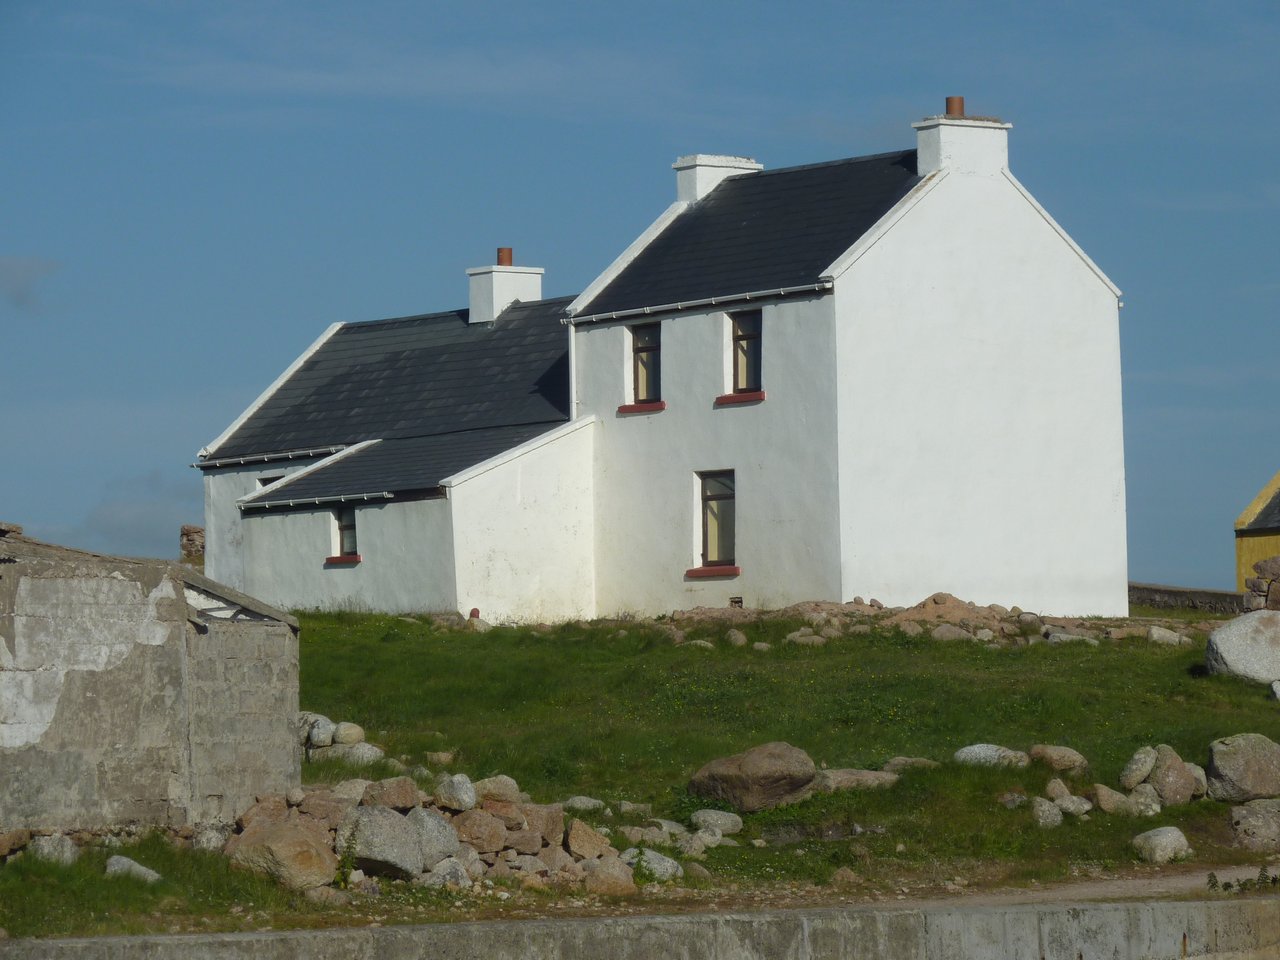 A house on Gola and Shags on sea cliffs